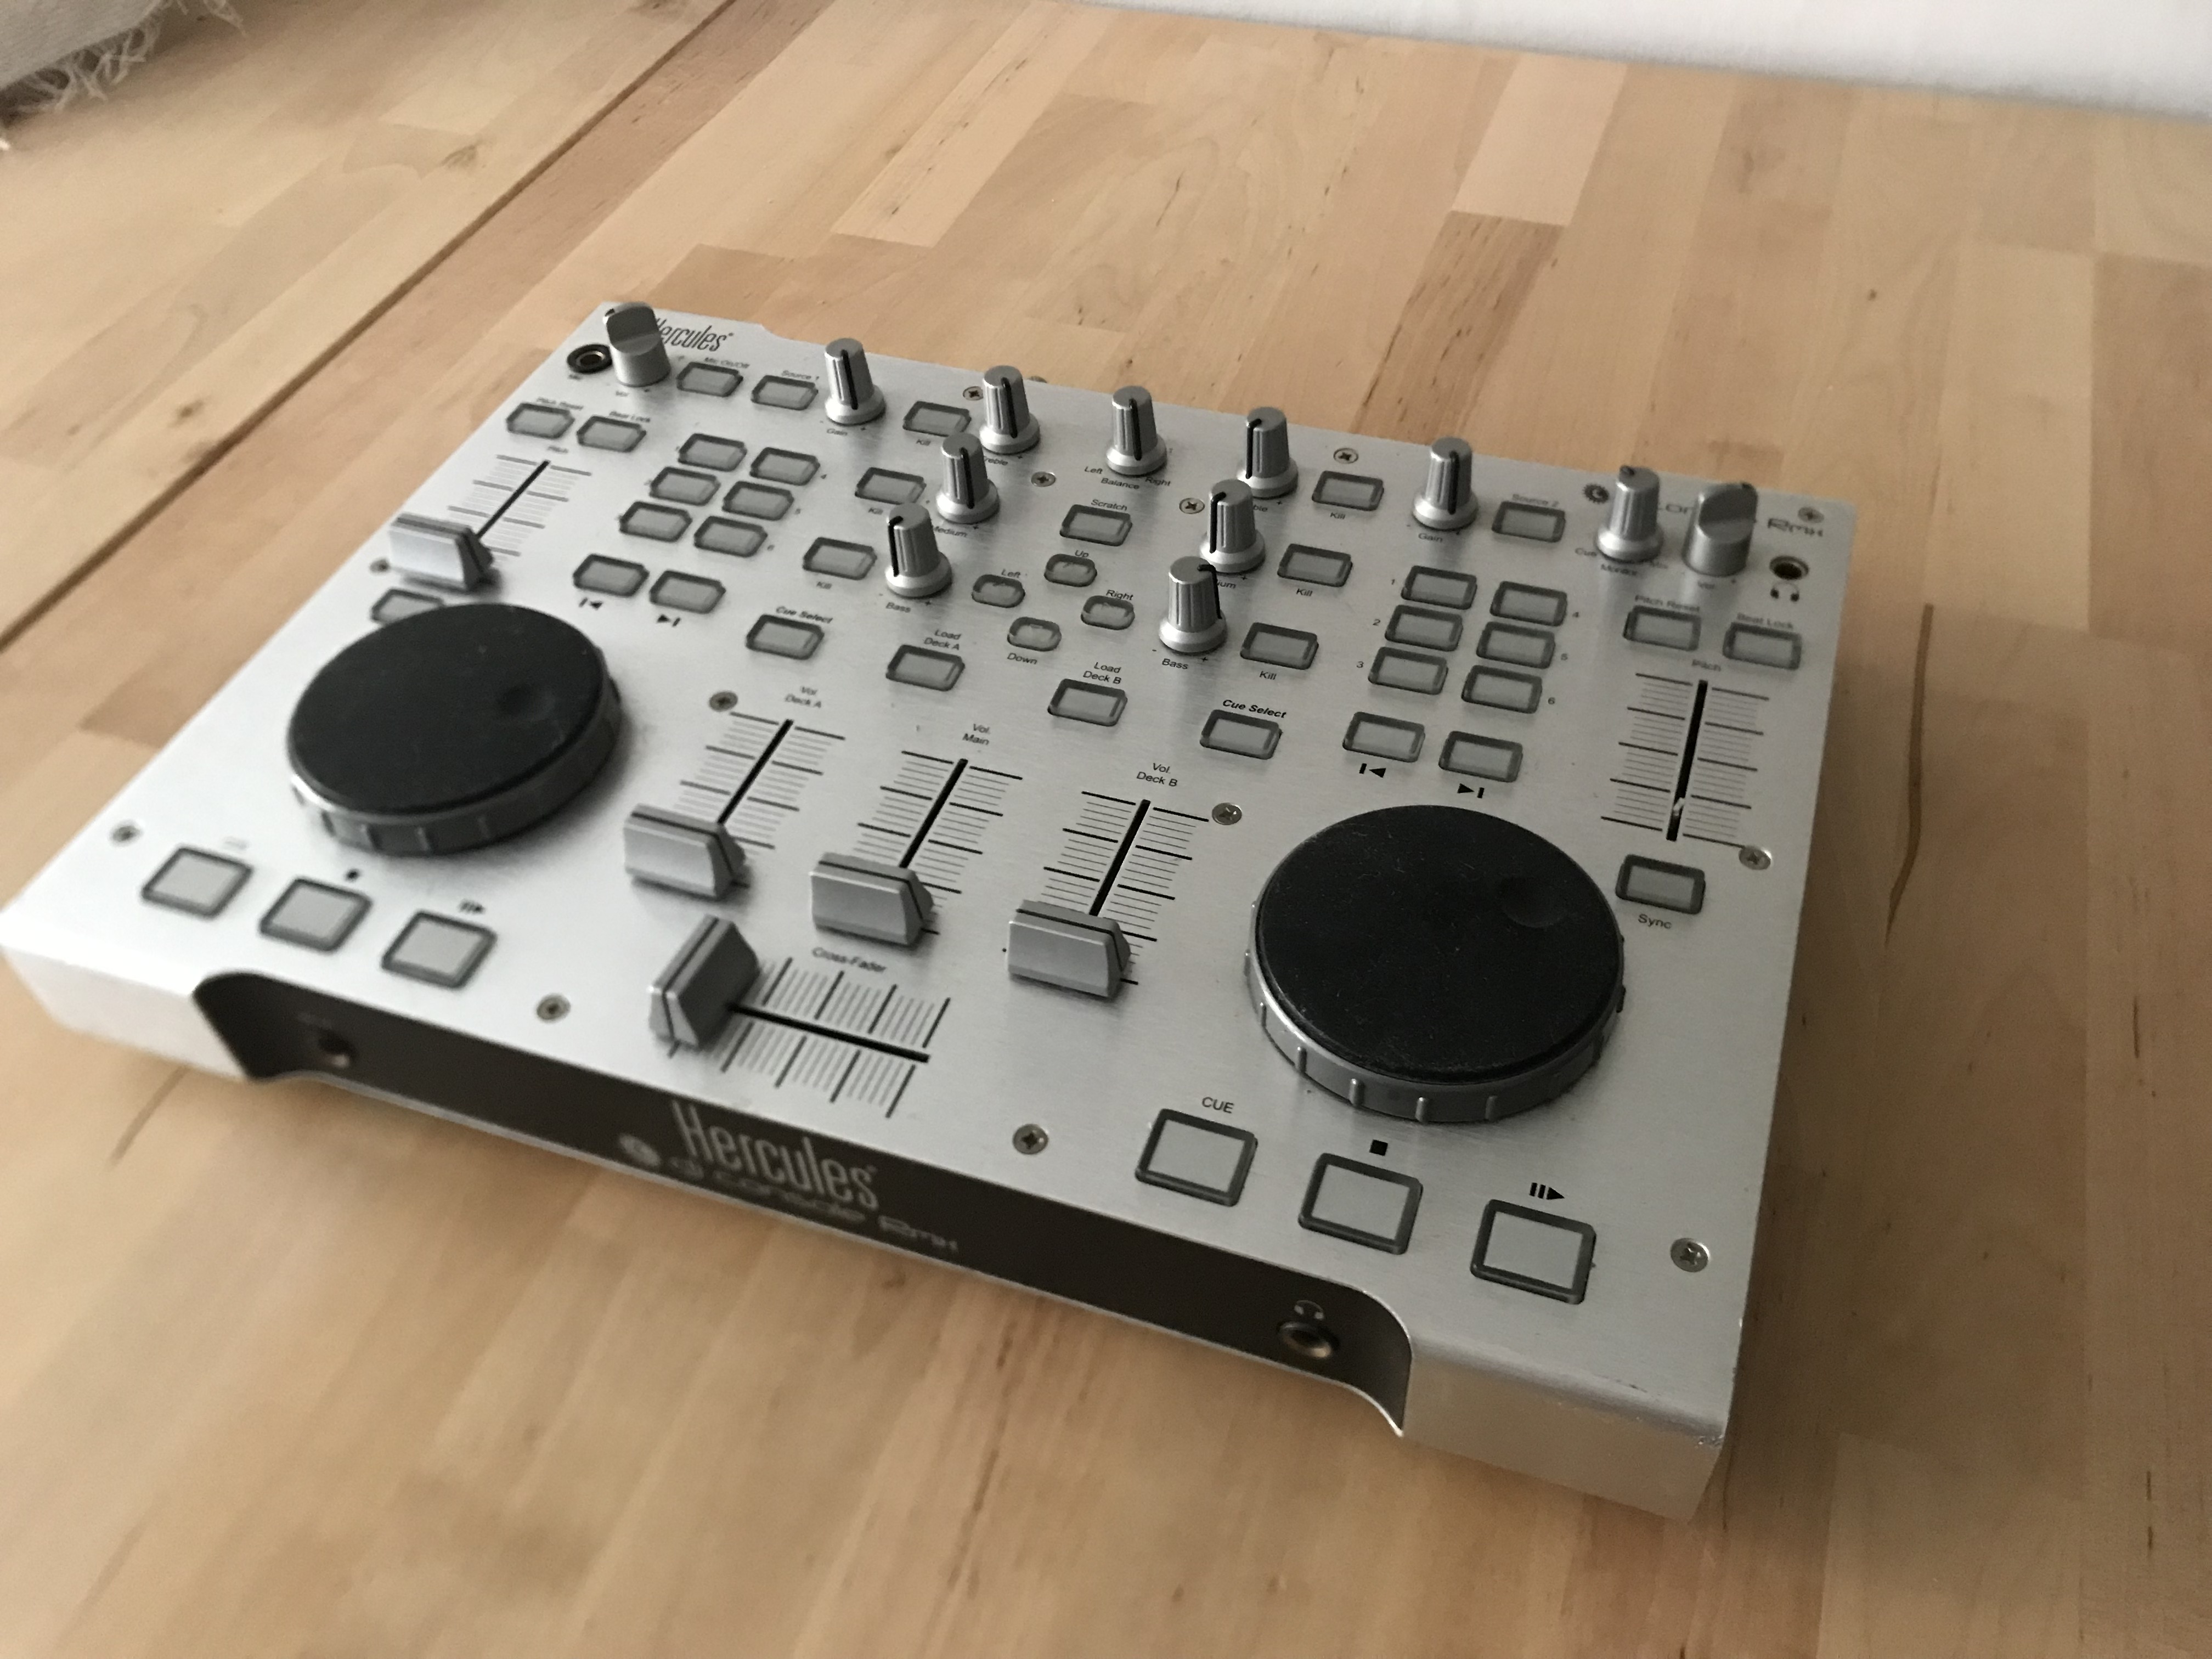 DJ Console RMX - Hercules DJ Console RMX - Audiofanzine